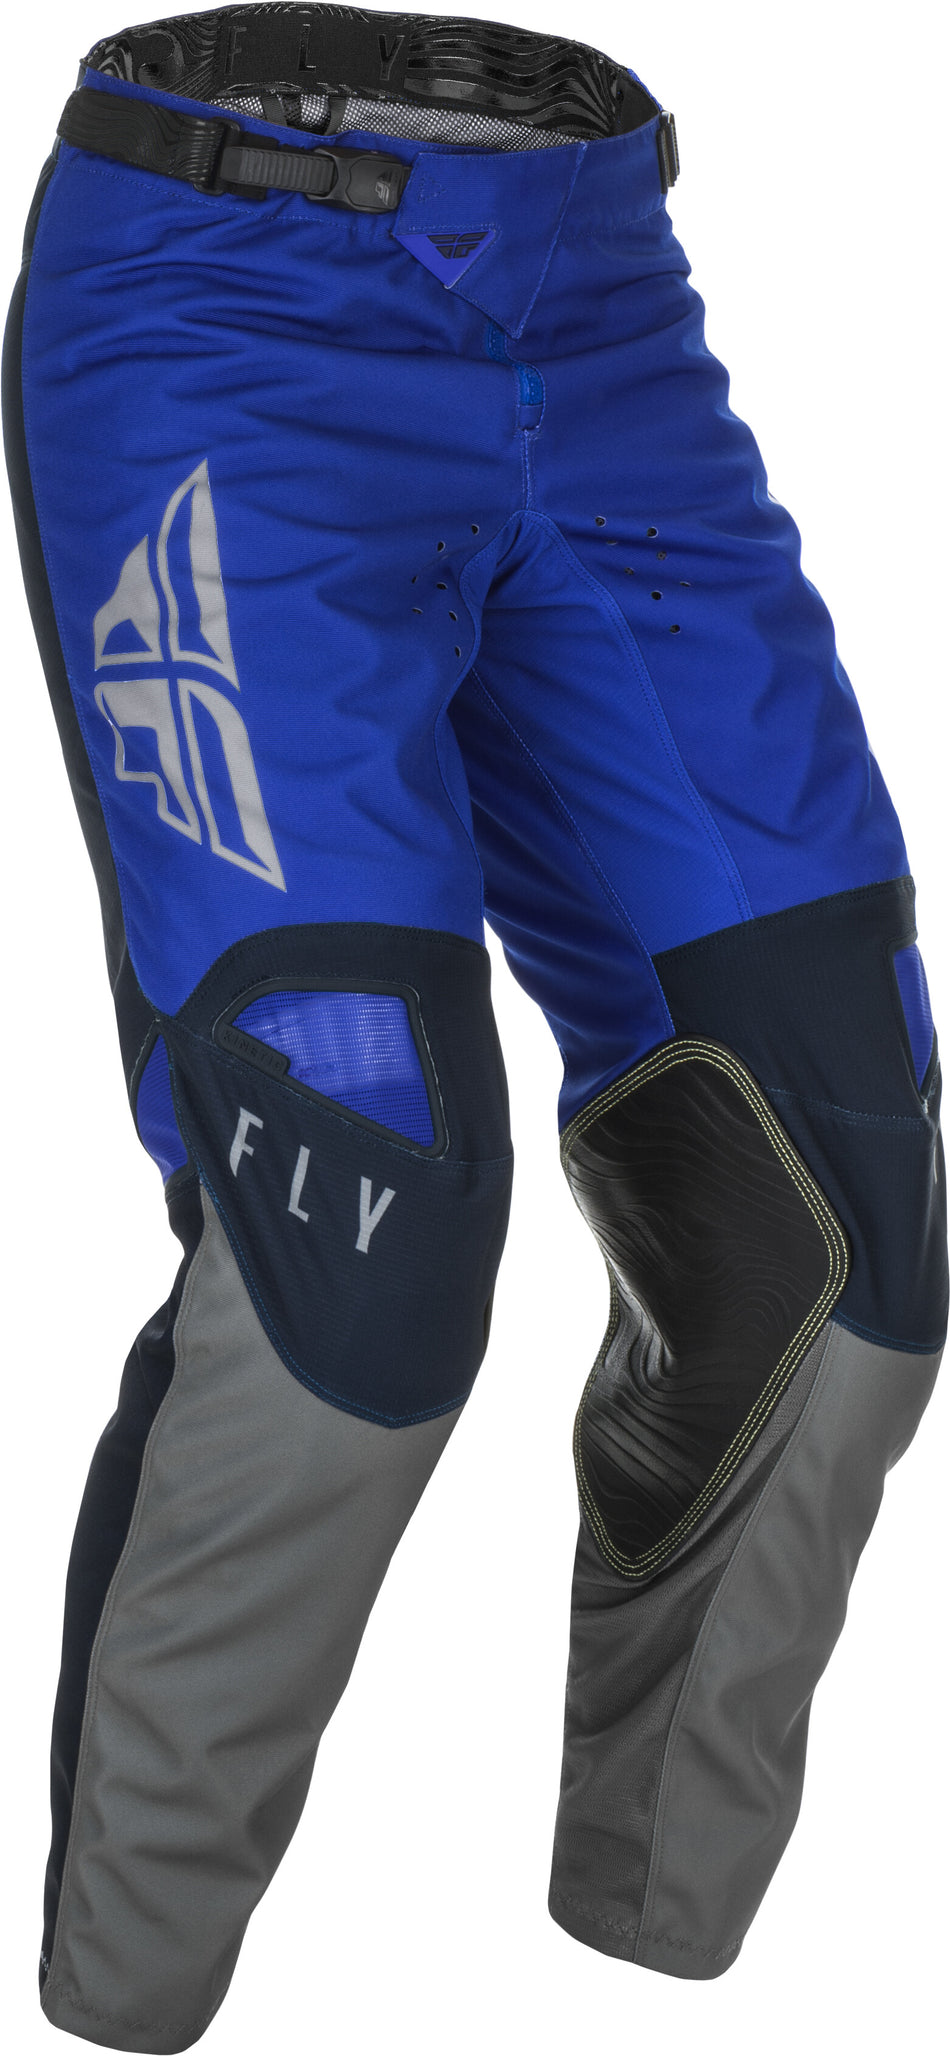 FLY RACING Youth Kinetic K121 Pants Blue/Navy/Grey Sz 20 374-43120